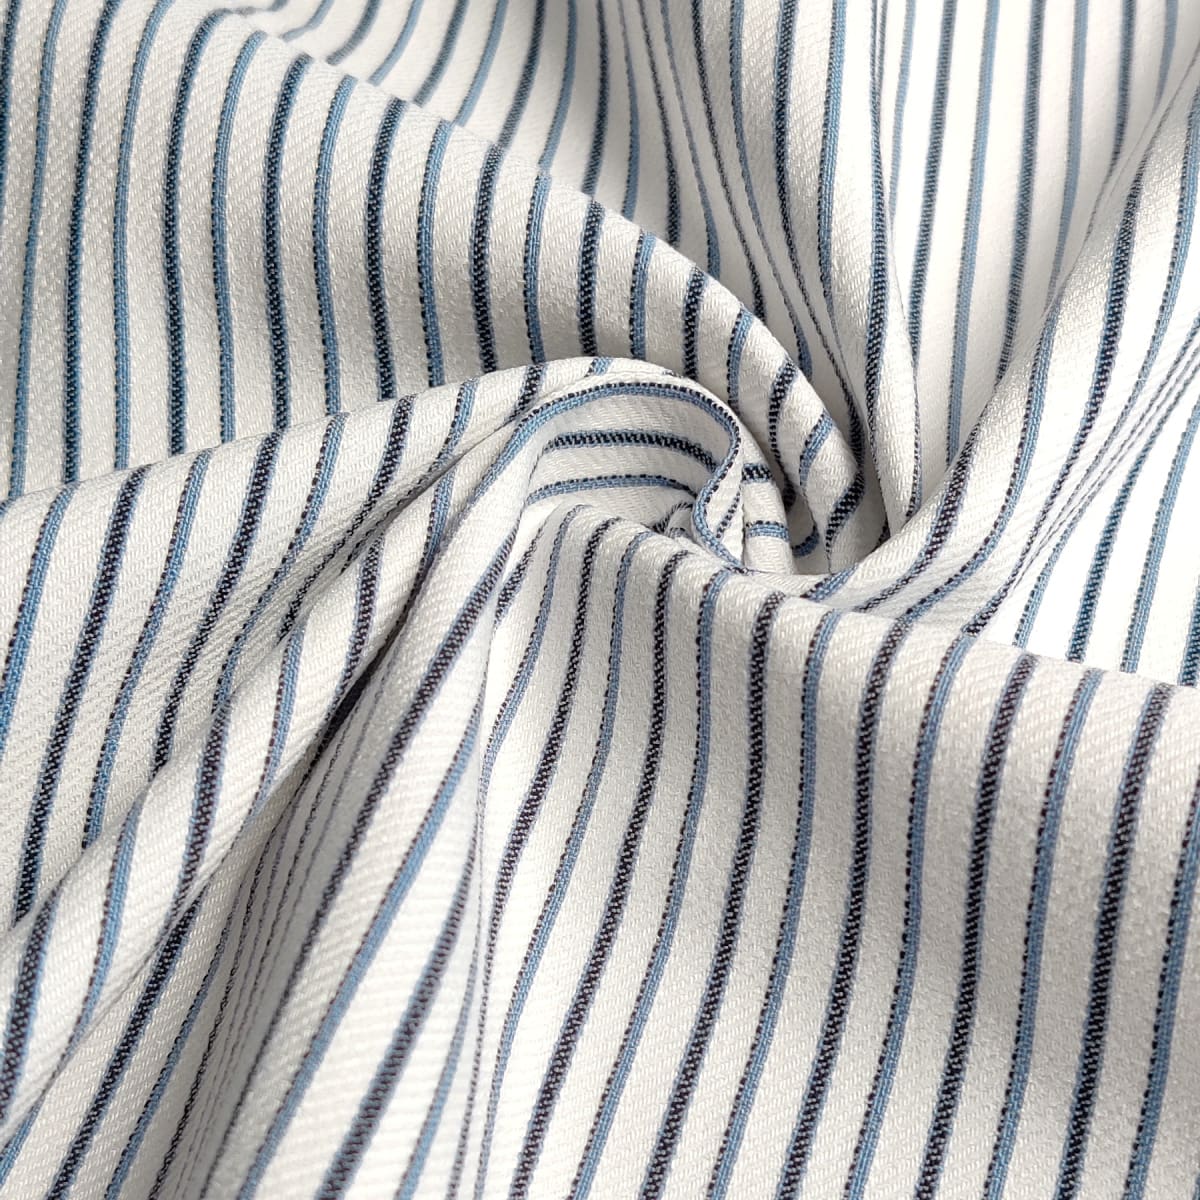 Bengaline fabric | white and blue stripes